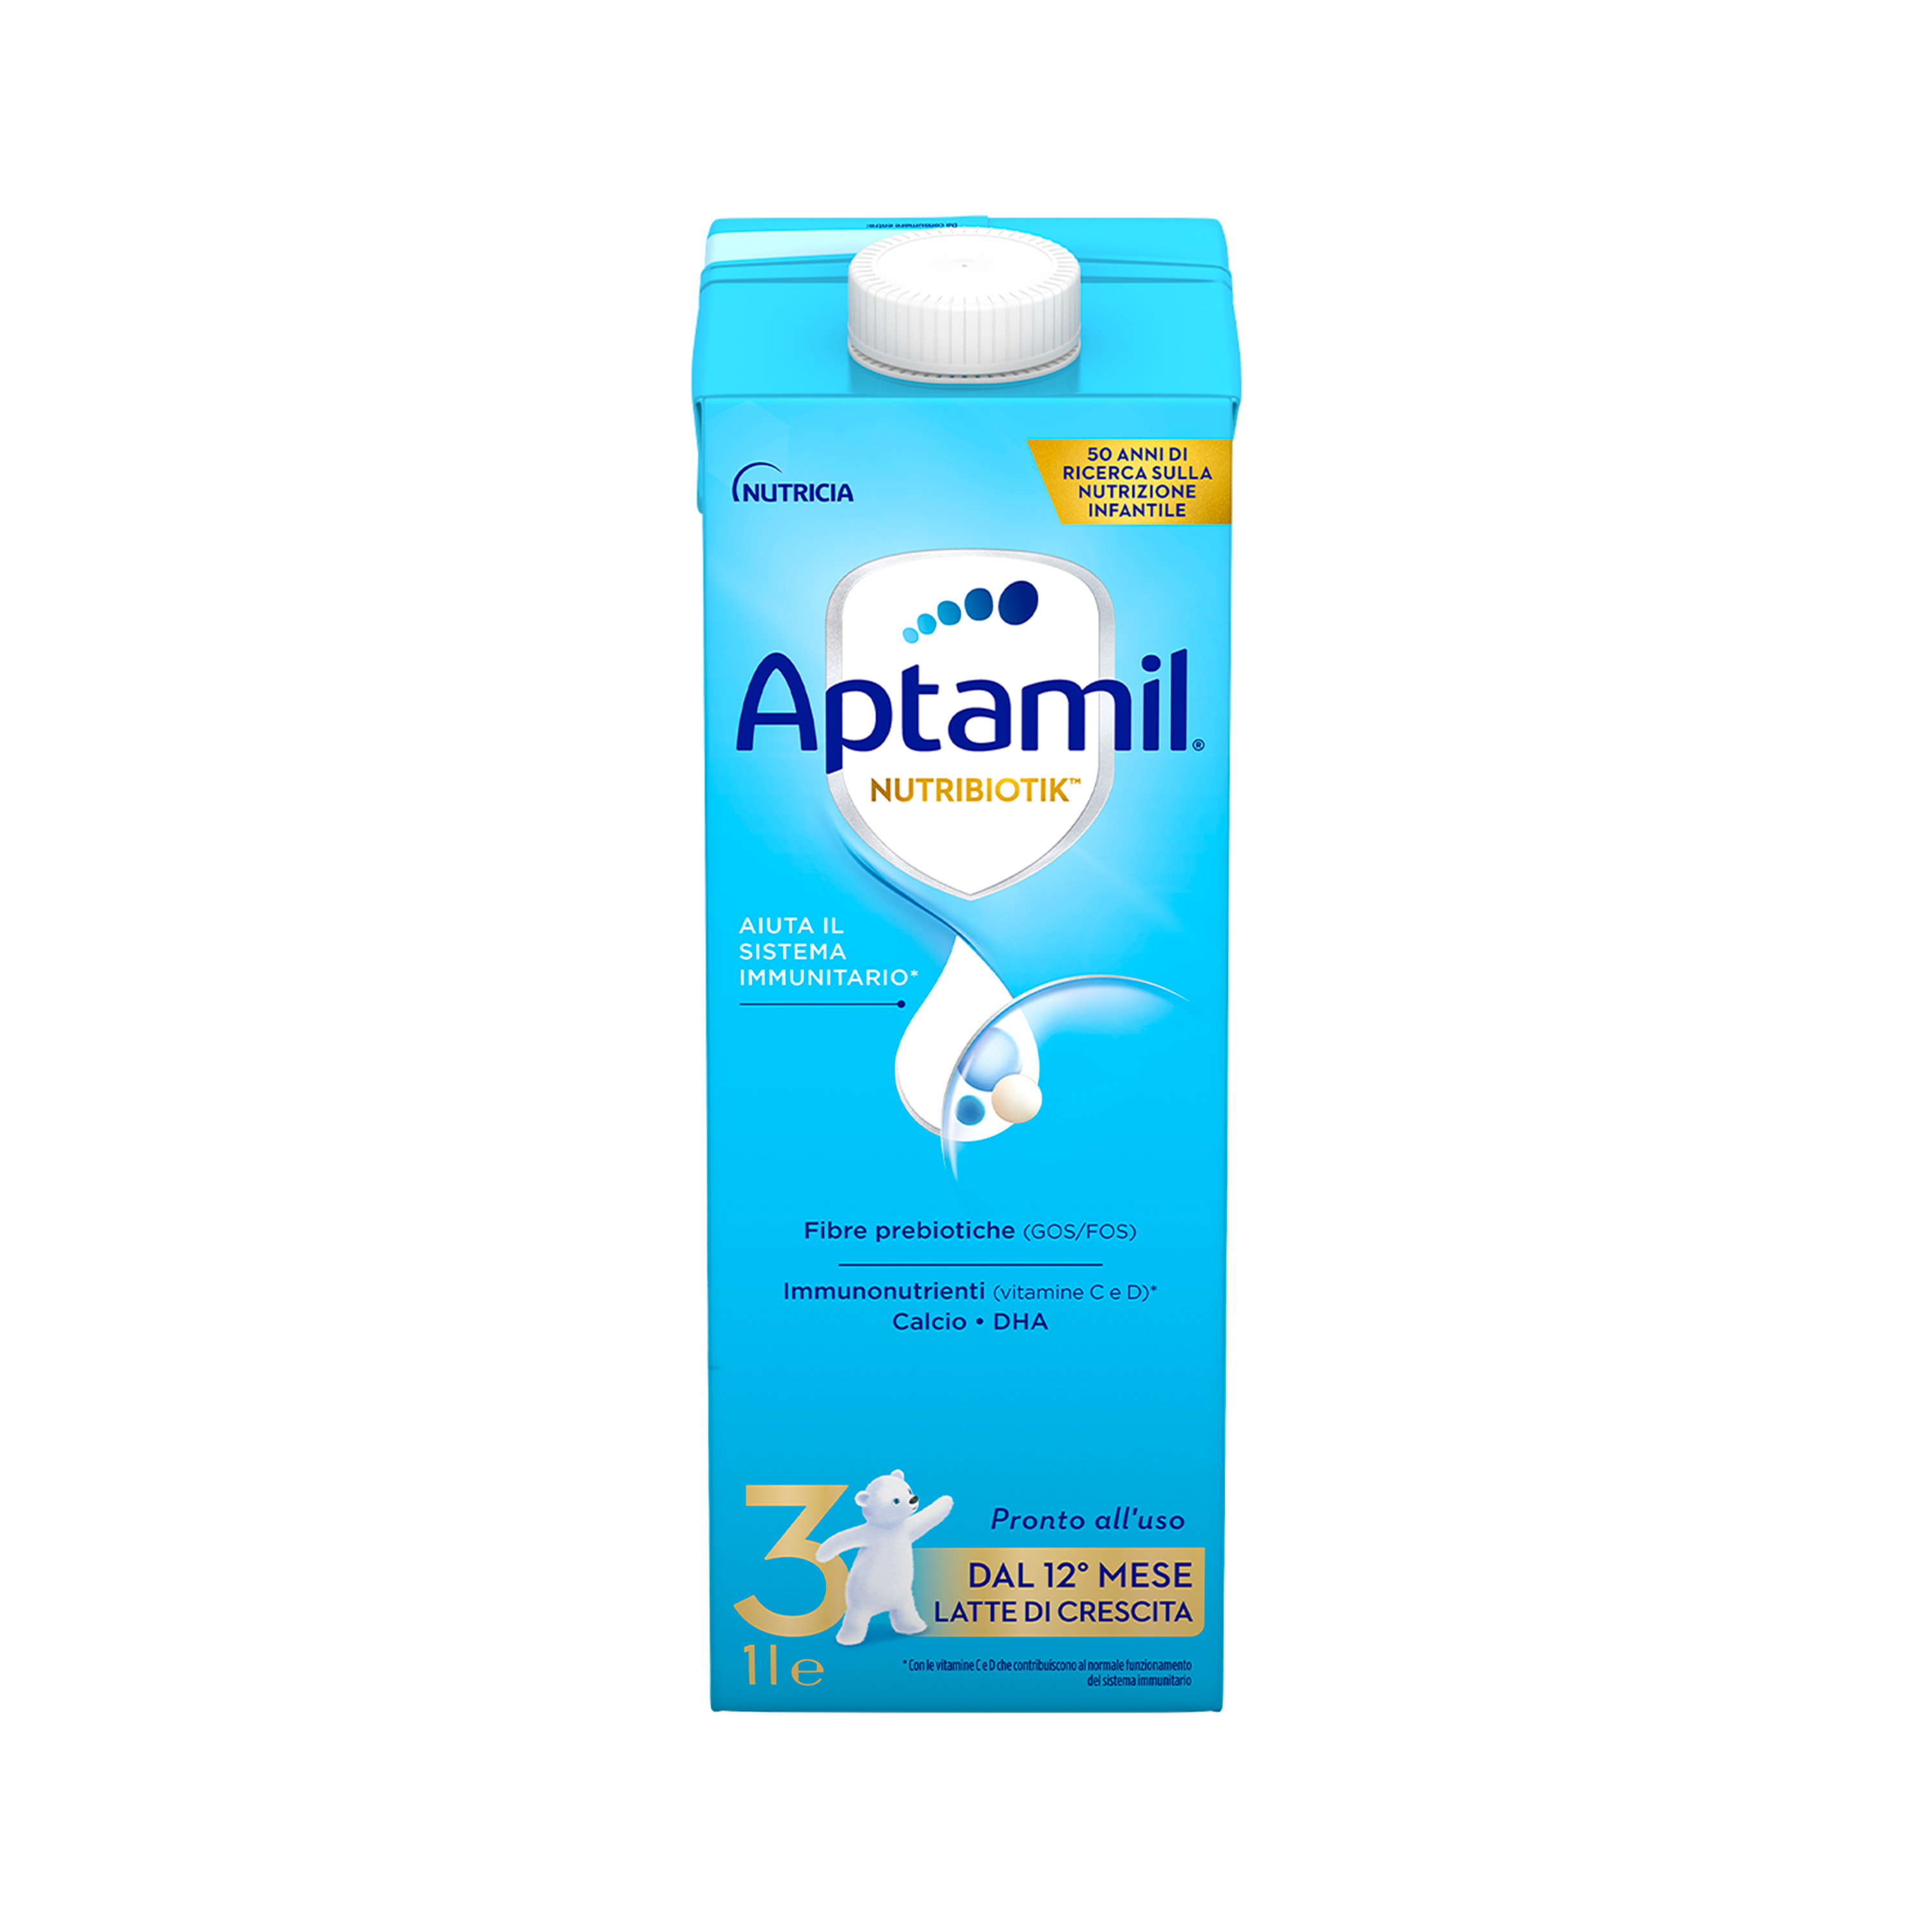 Image of Aptamil 3 Nutribiotik Nutricia 1000ml